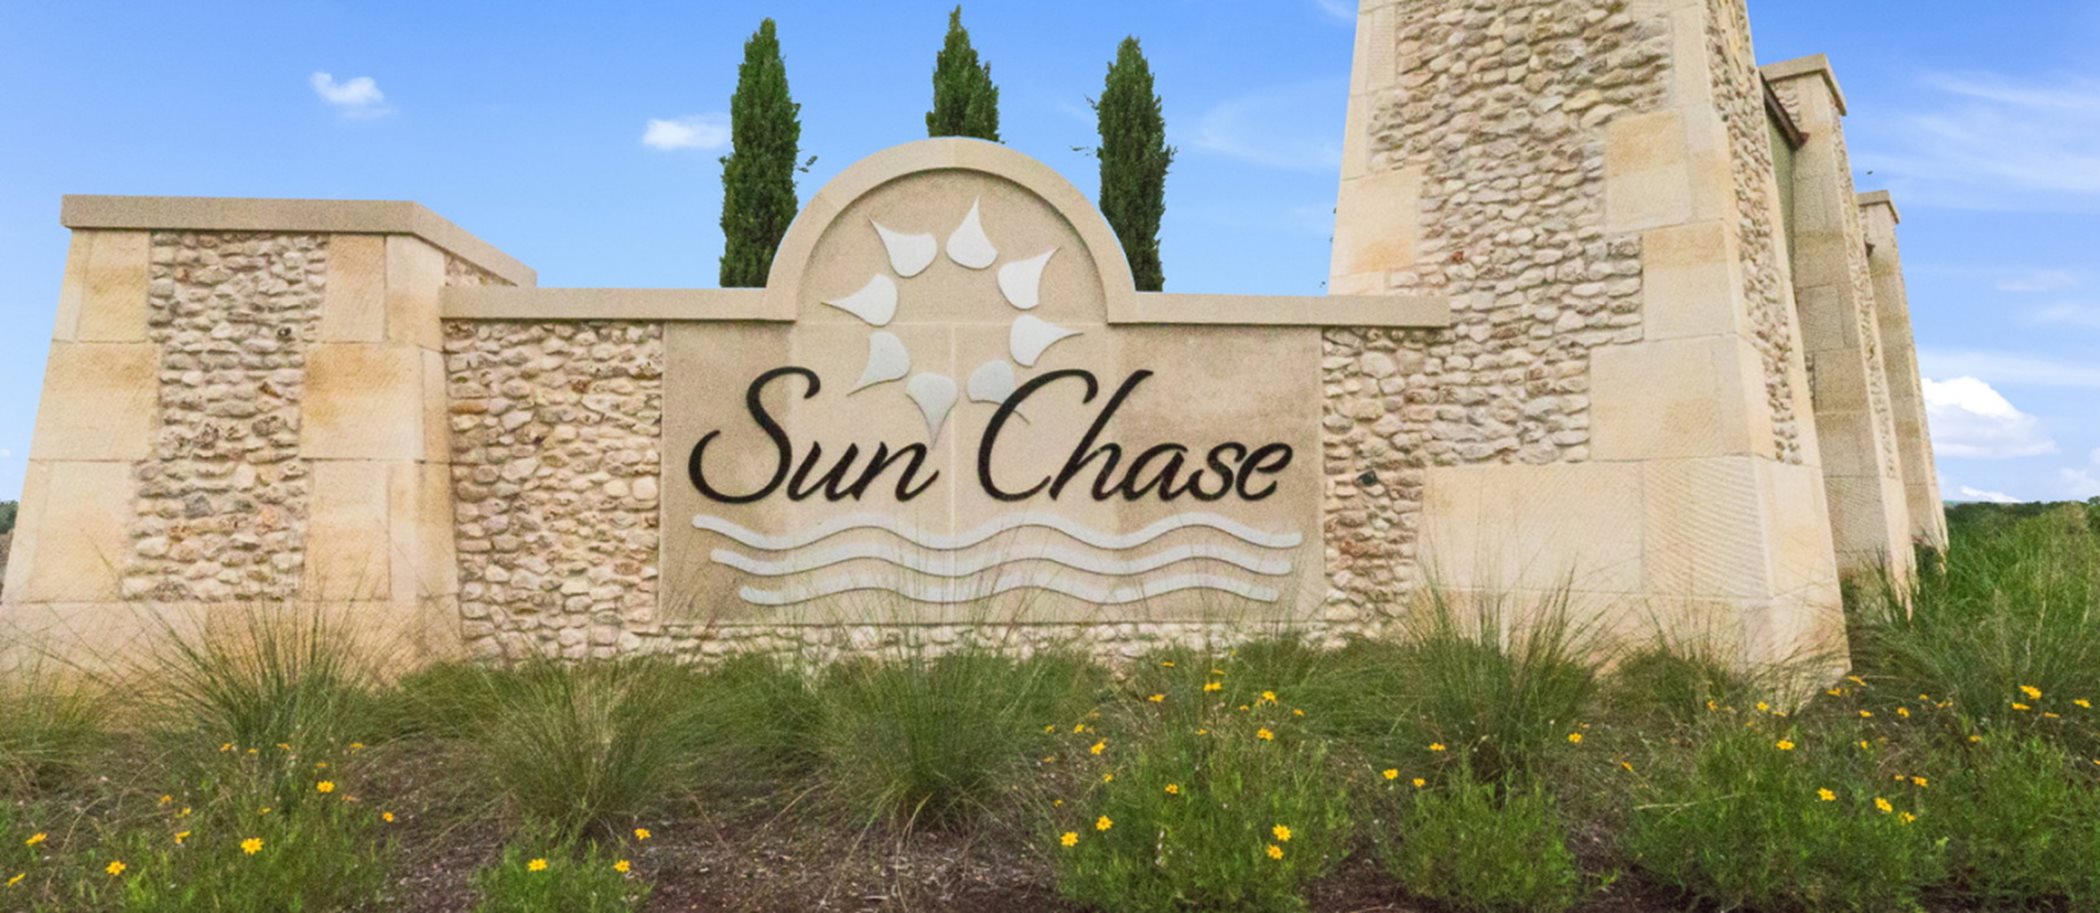 Sun Chase Entrance